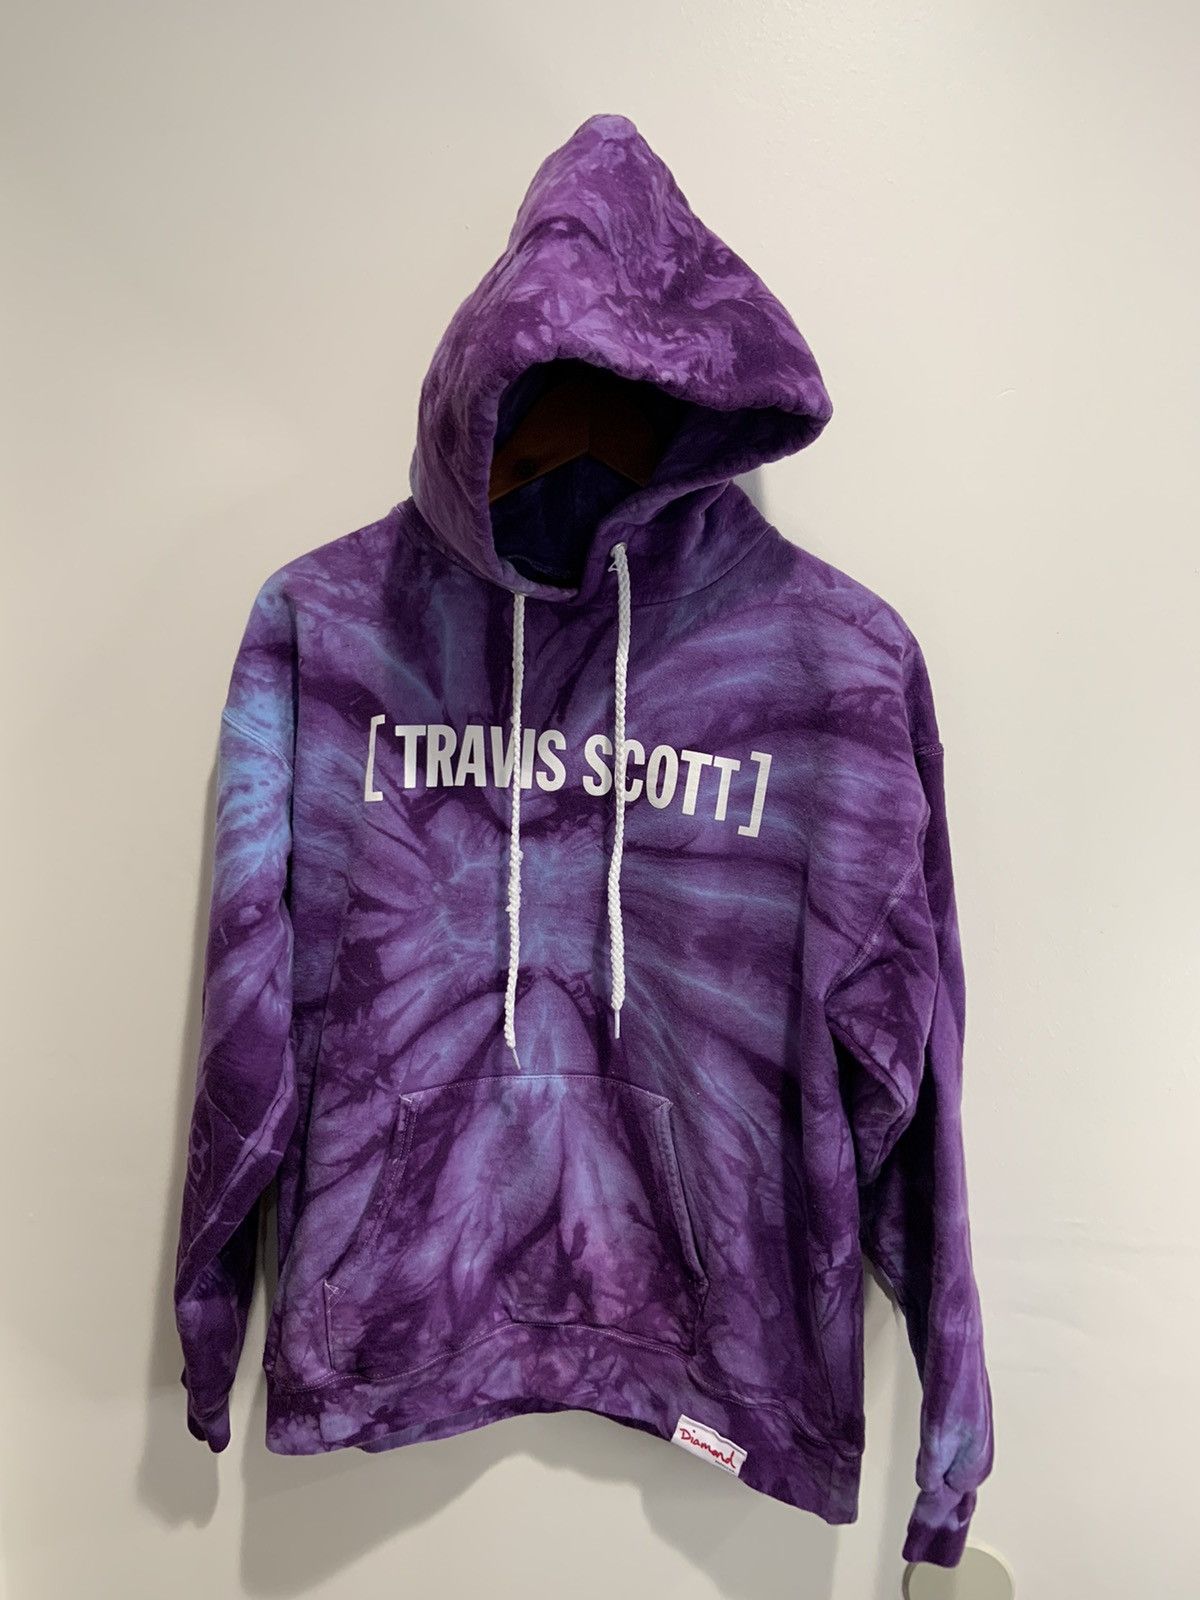 Travis Scott Travis scott tie dye hoodie Size US S / EU 44-46 / 1 - 1 Preview